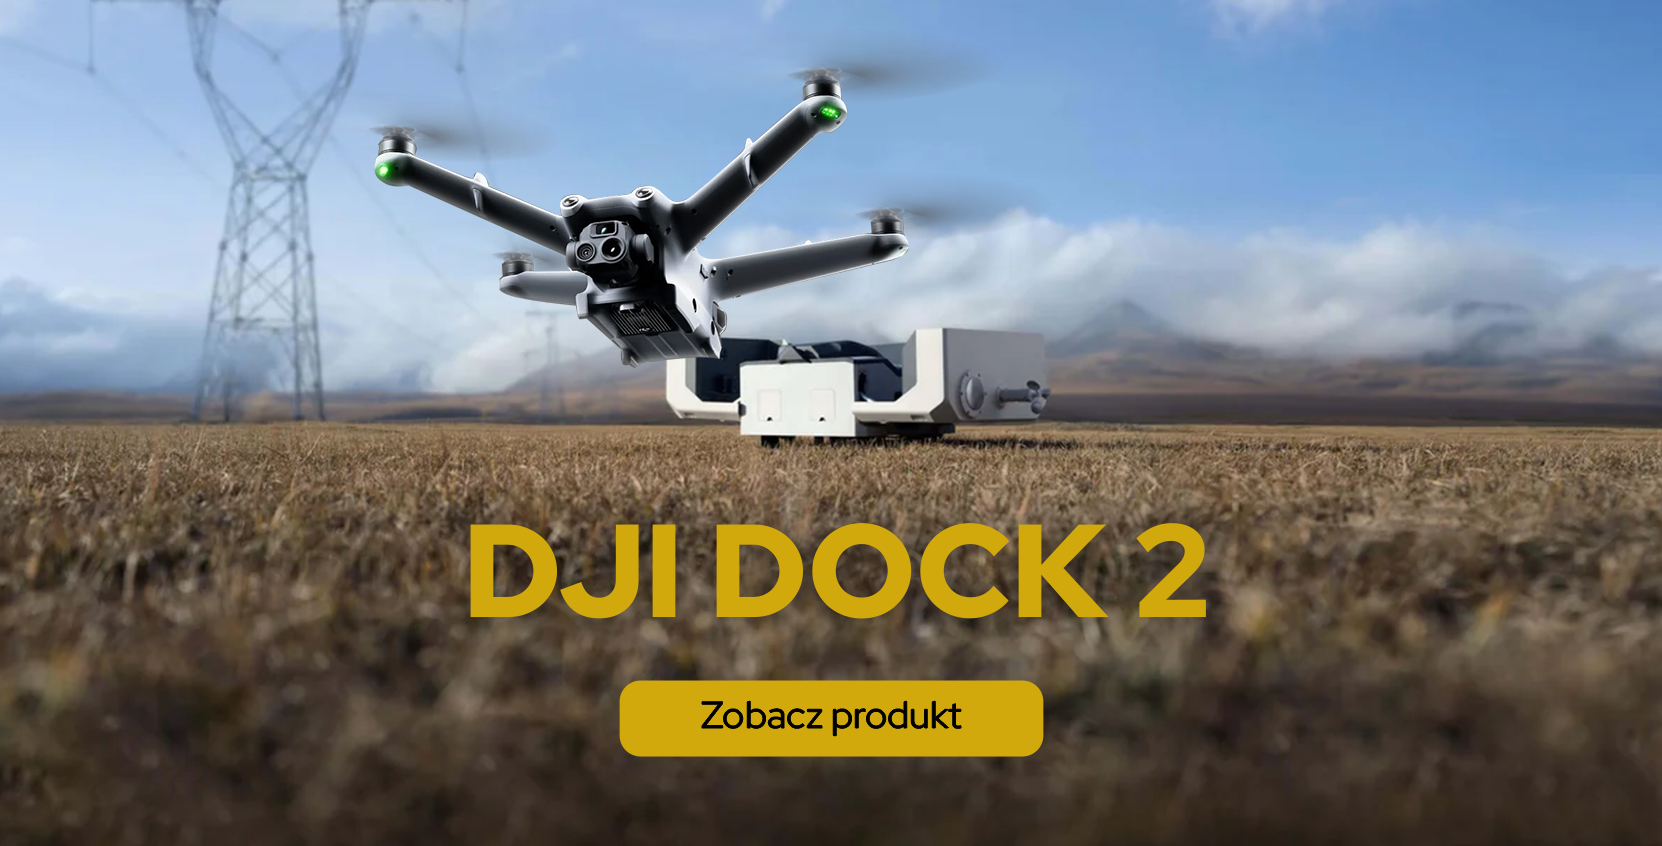 DJI Dock 2 - NaviGate - Oficjalny Dystrybutor DJI w Polsce